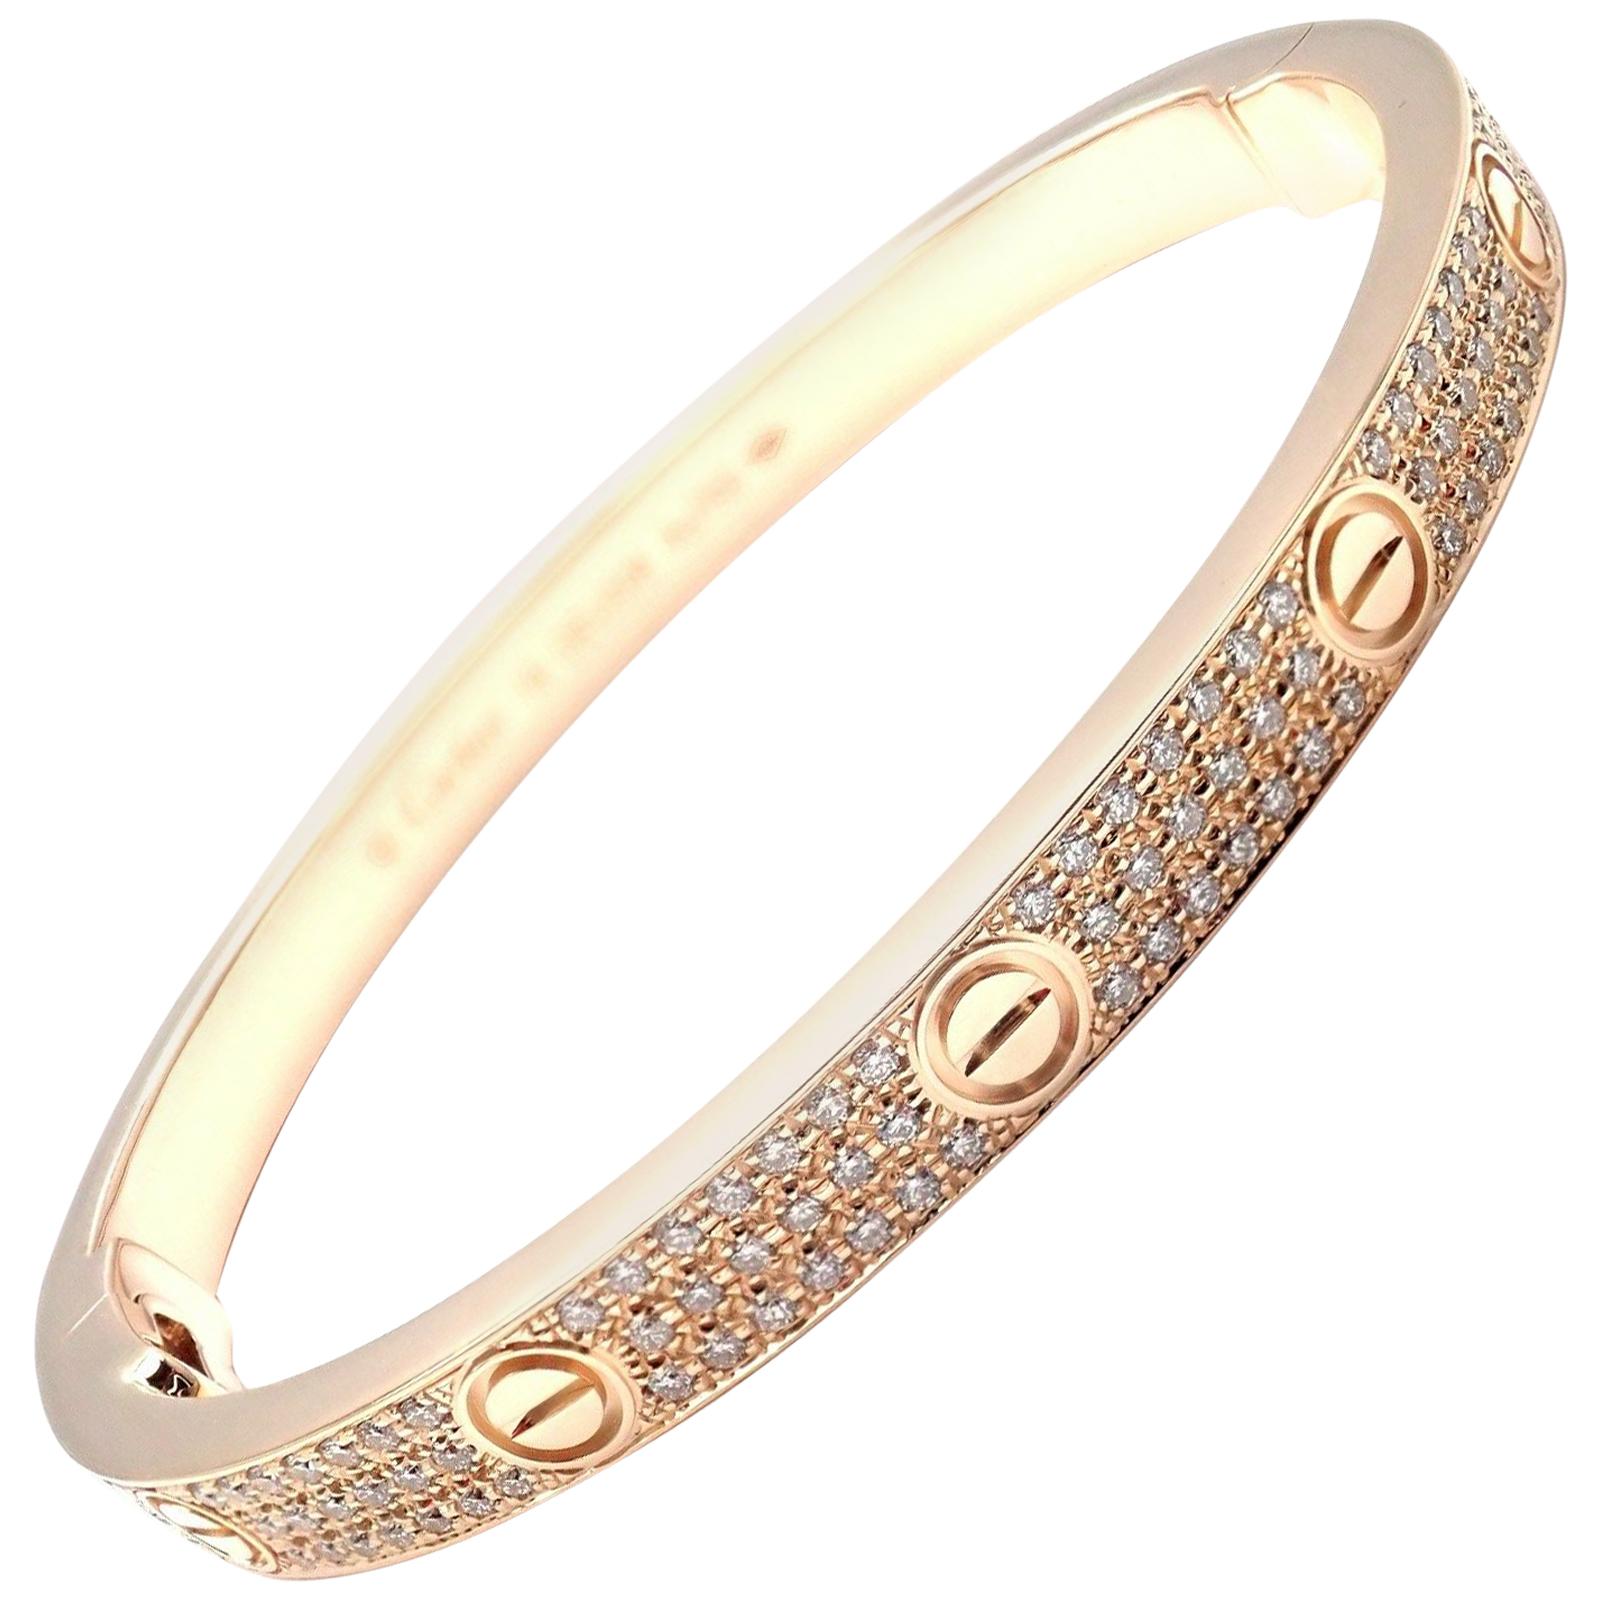 Cartier Love Bracelet 18k Rose Gold Paved Full Diamond Bangle  N6036917-CJbrand Jewelry & Watch